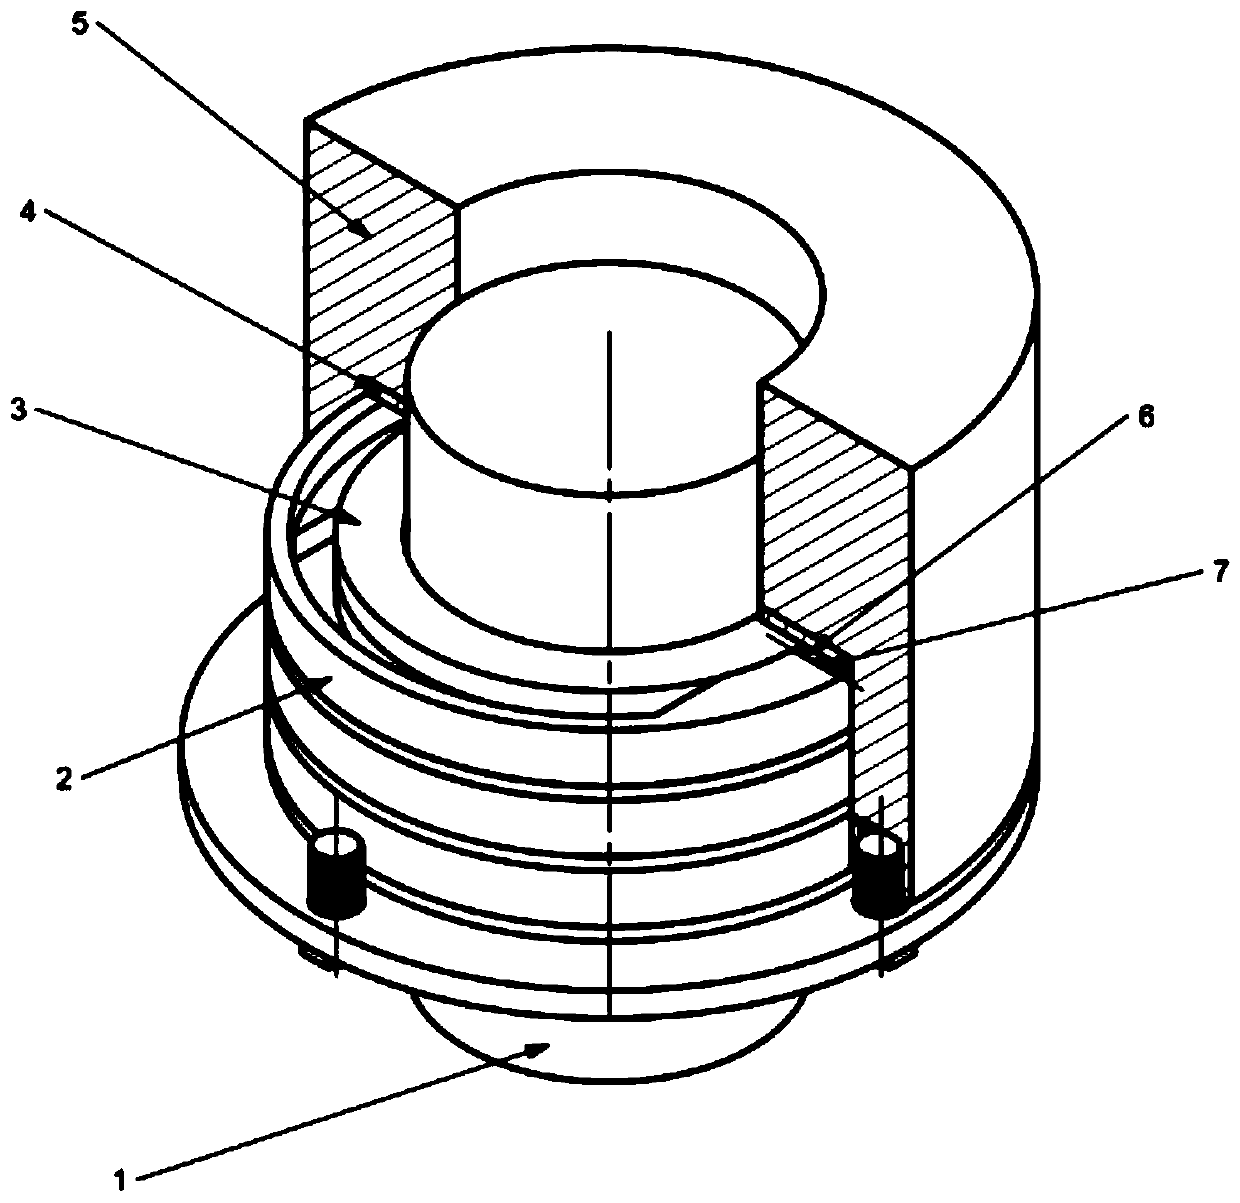 Self-healing closed type piston ring mechanism